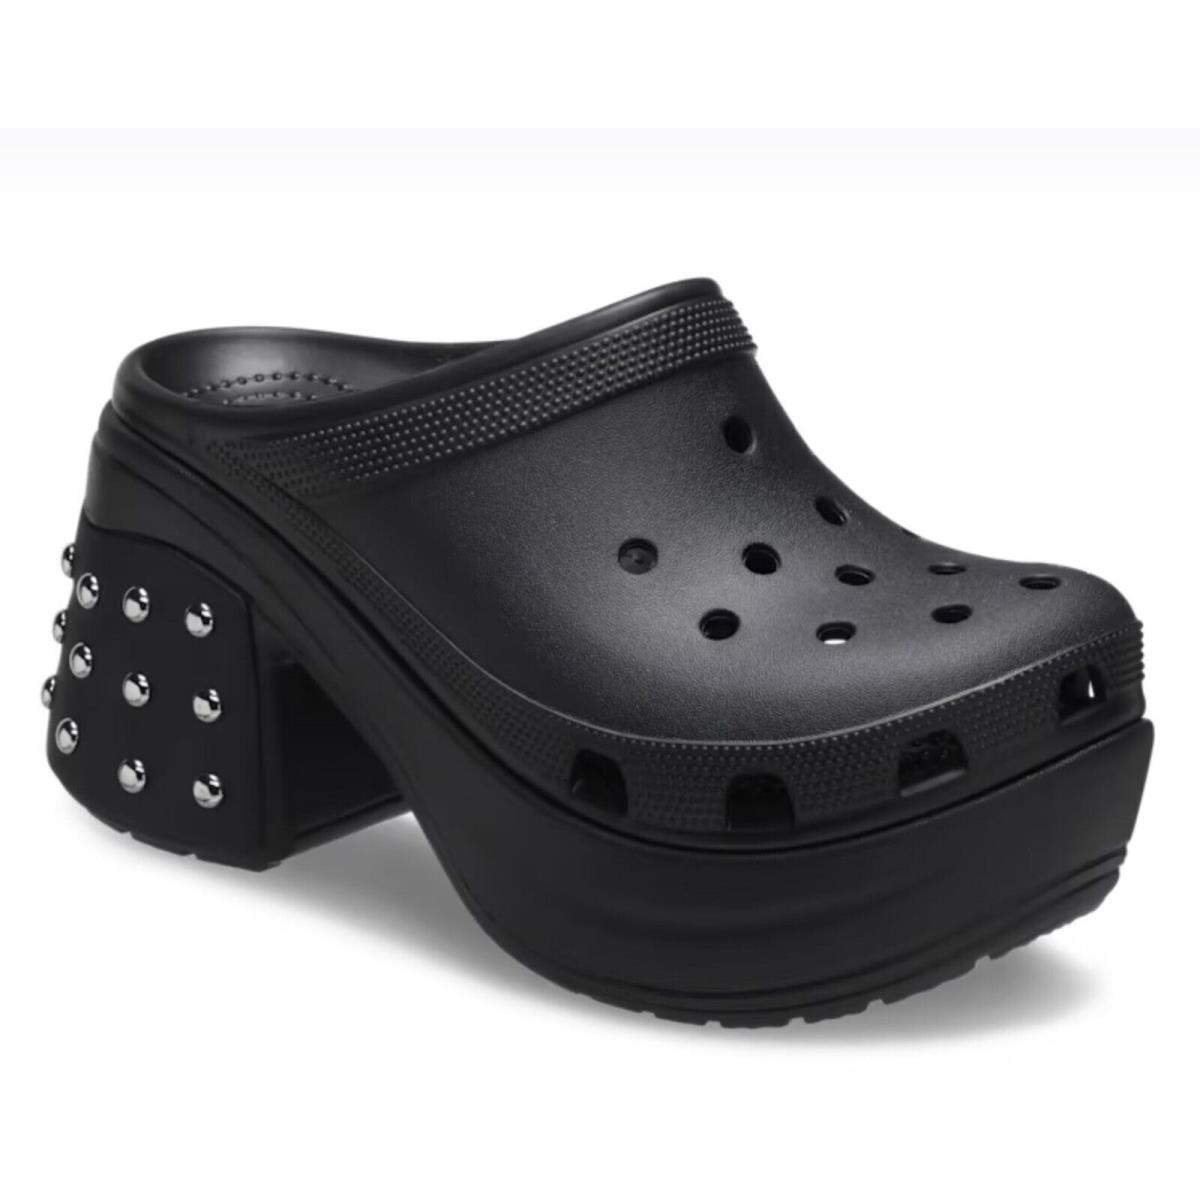 Crocs Siren Studded Heel Clog Black Women s Size 10 Tags